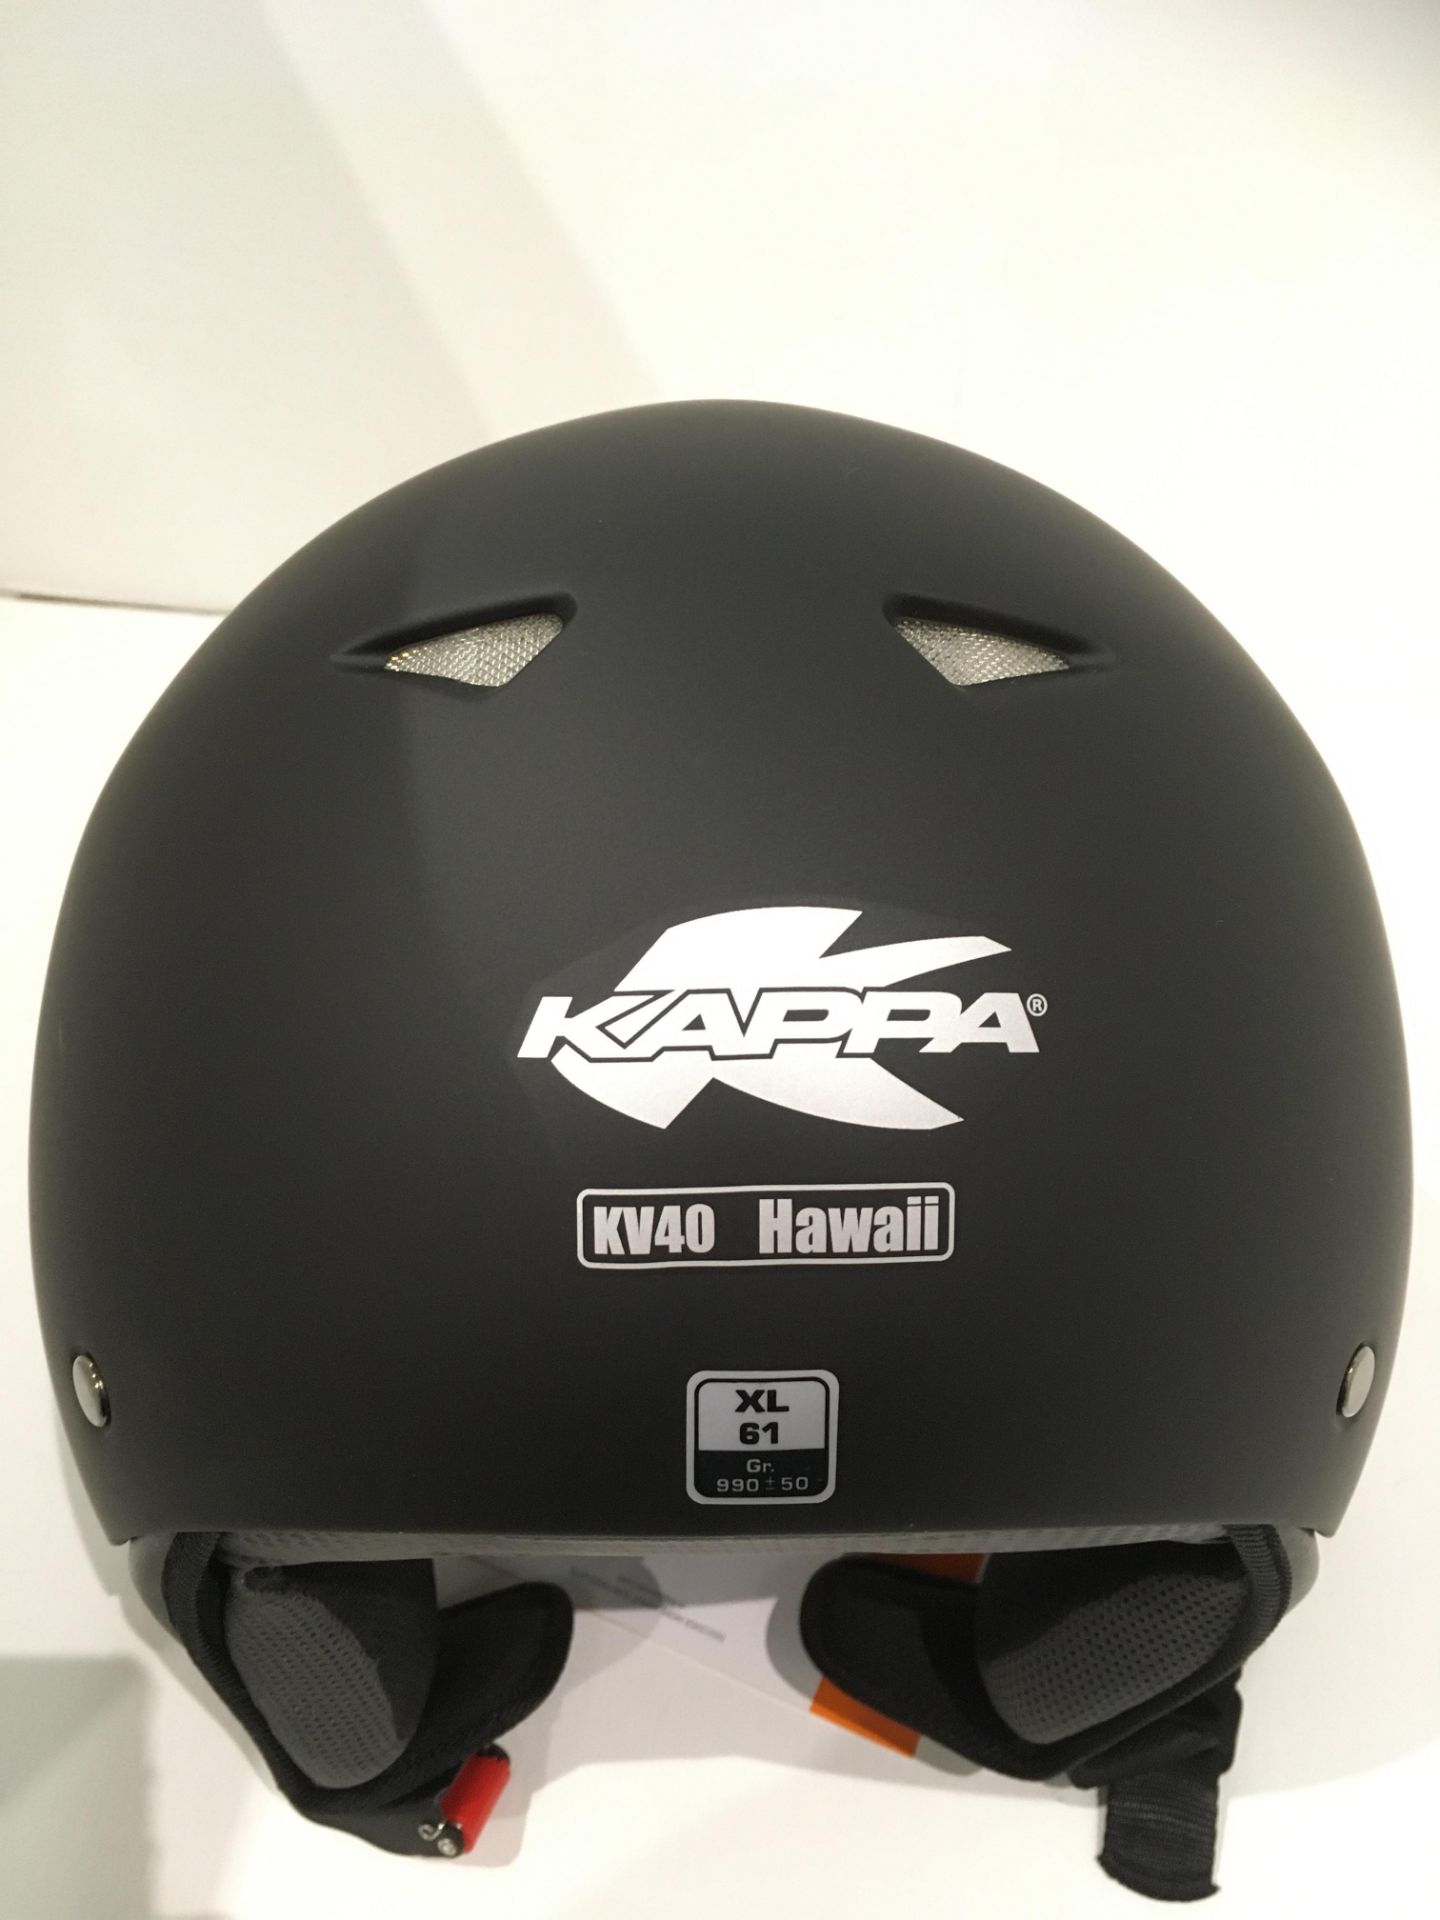 Kappa KV40 Hawaii motorbike helmet in matt black - size XL (61cm) - Image 4 of 4